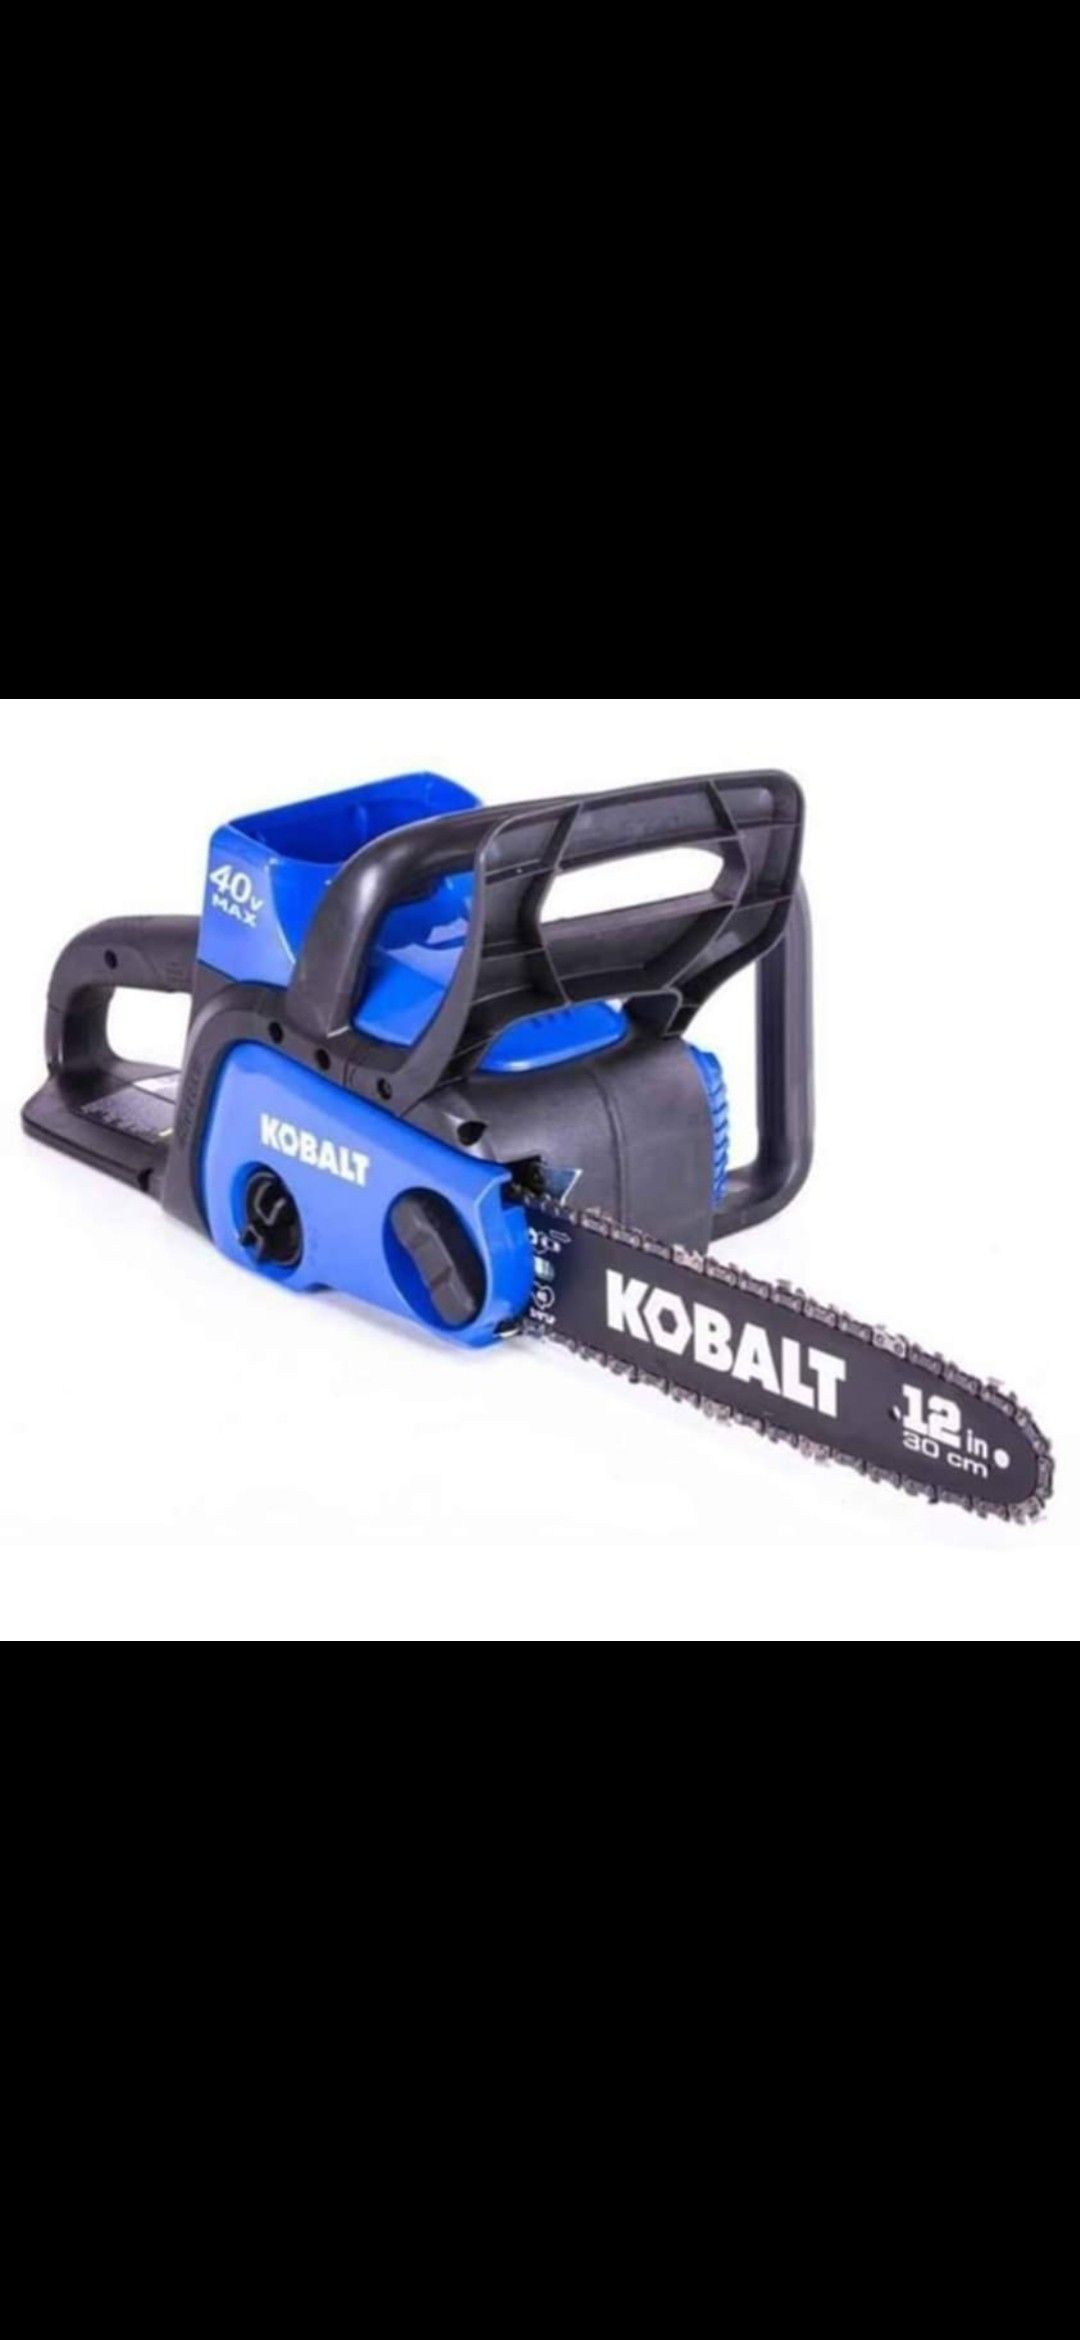 40v Kobalt Battery Operated Chainsaw